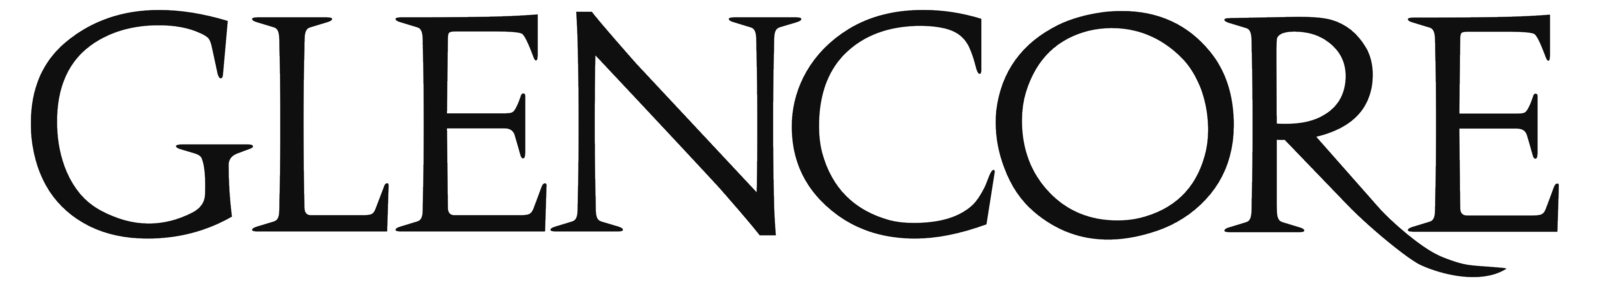 Glencore Logo